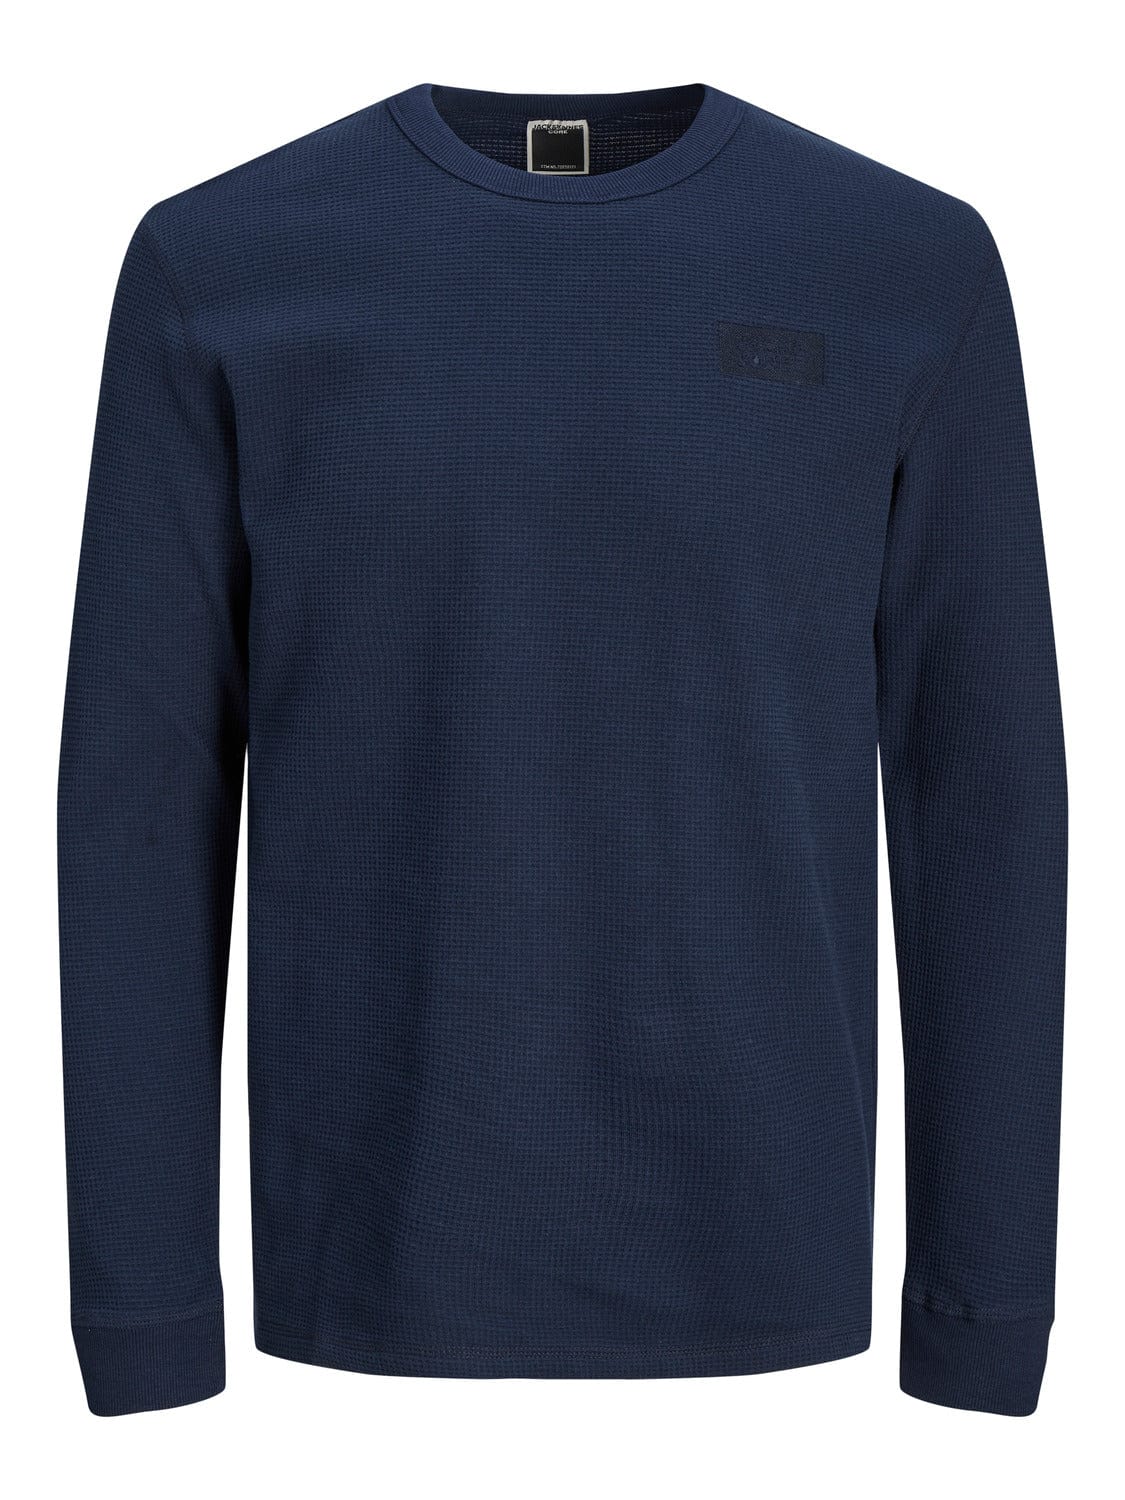 Camiseta de algodón de manga larga azul marino CLASSIC